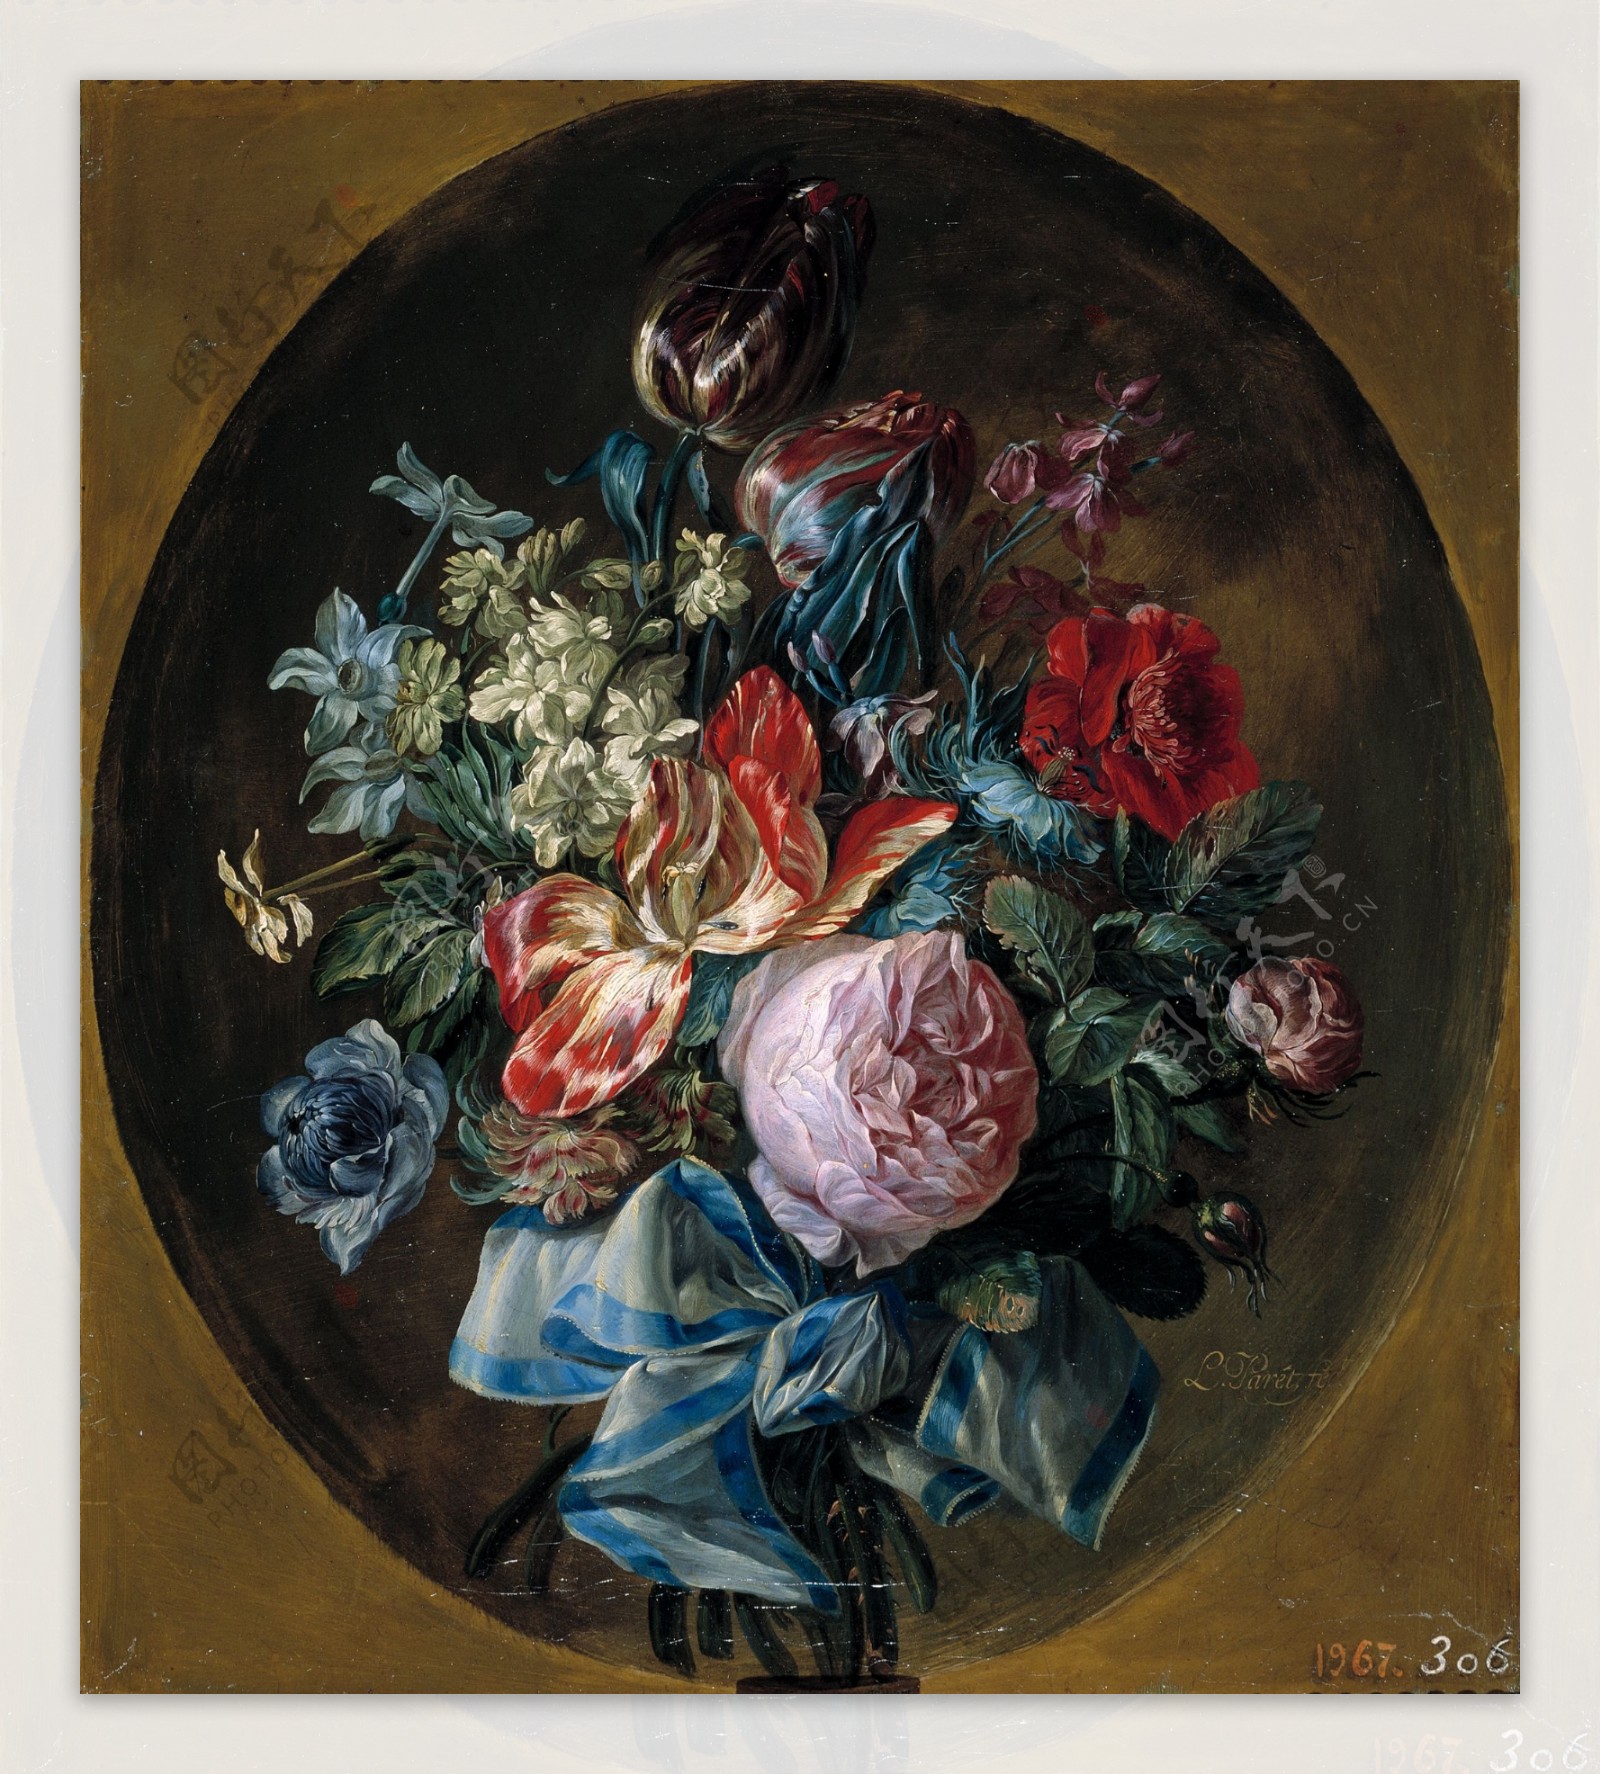 ParetyAlcazarLuisRamilletedefloresIICa.1780花卉水果蔬菜器皿静物印象画派写实主义油画装饰画